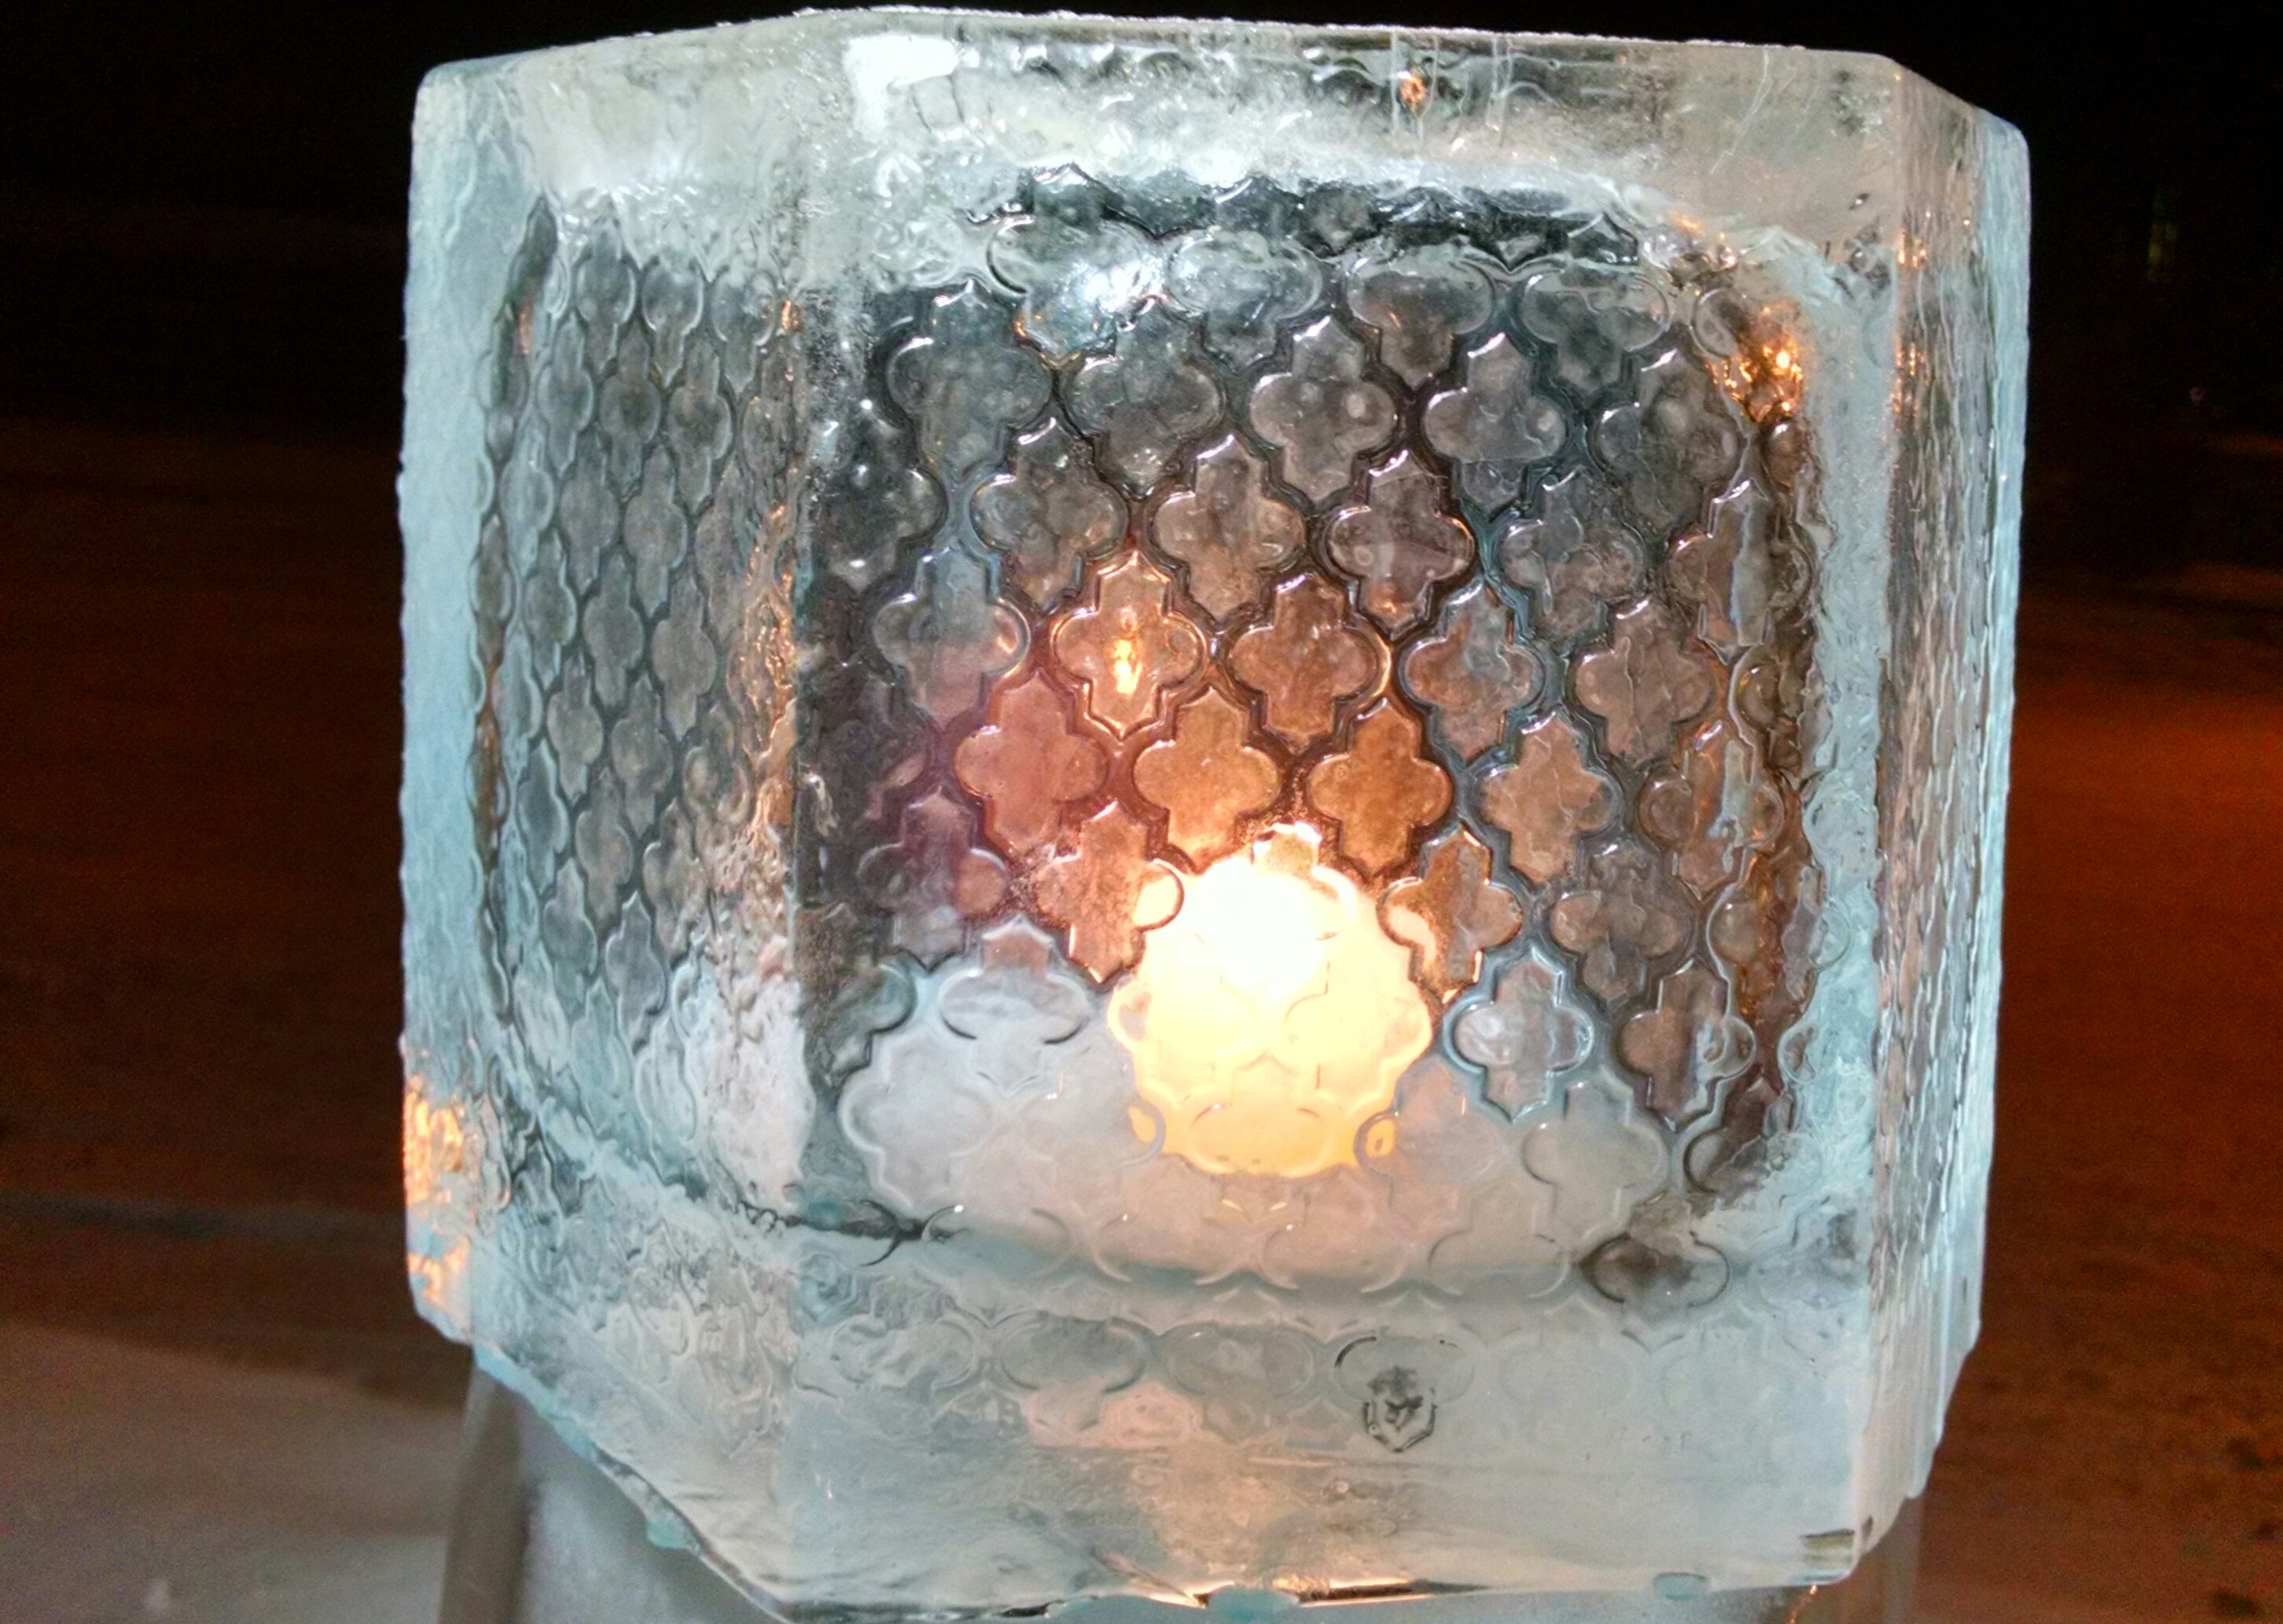 How to Make an Ice Lantern